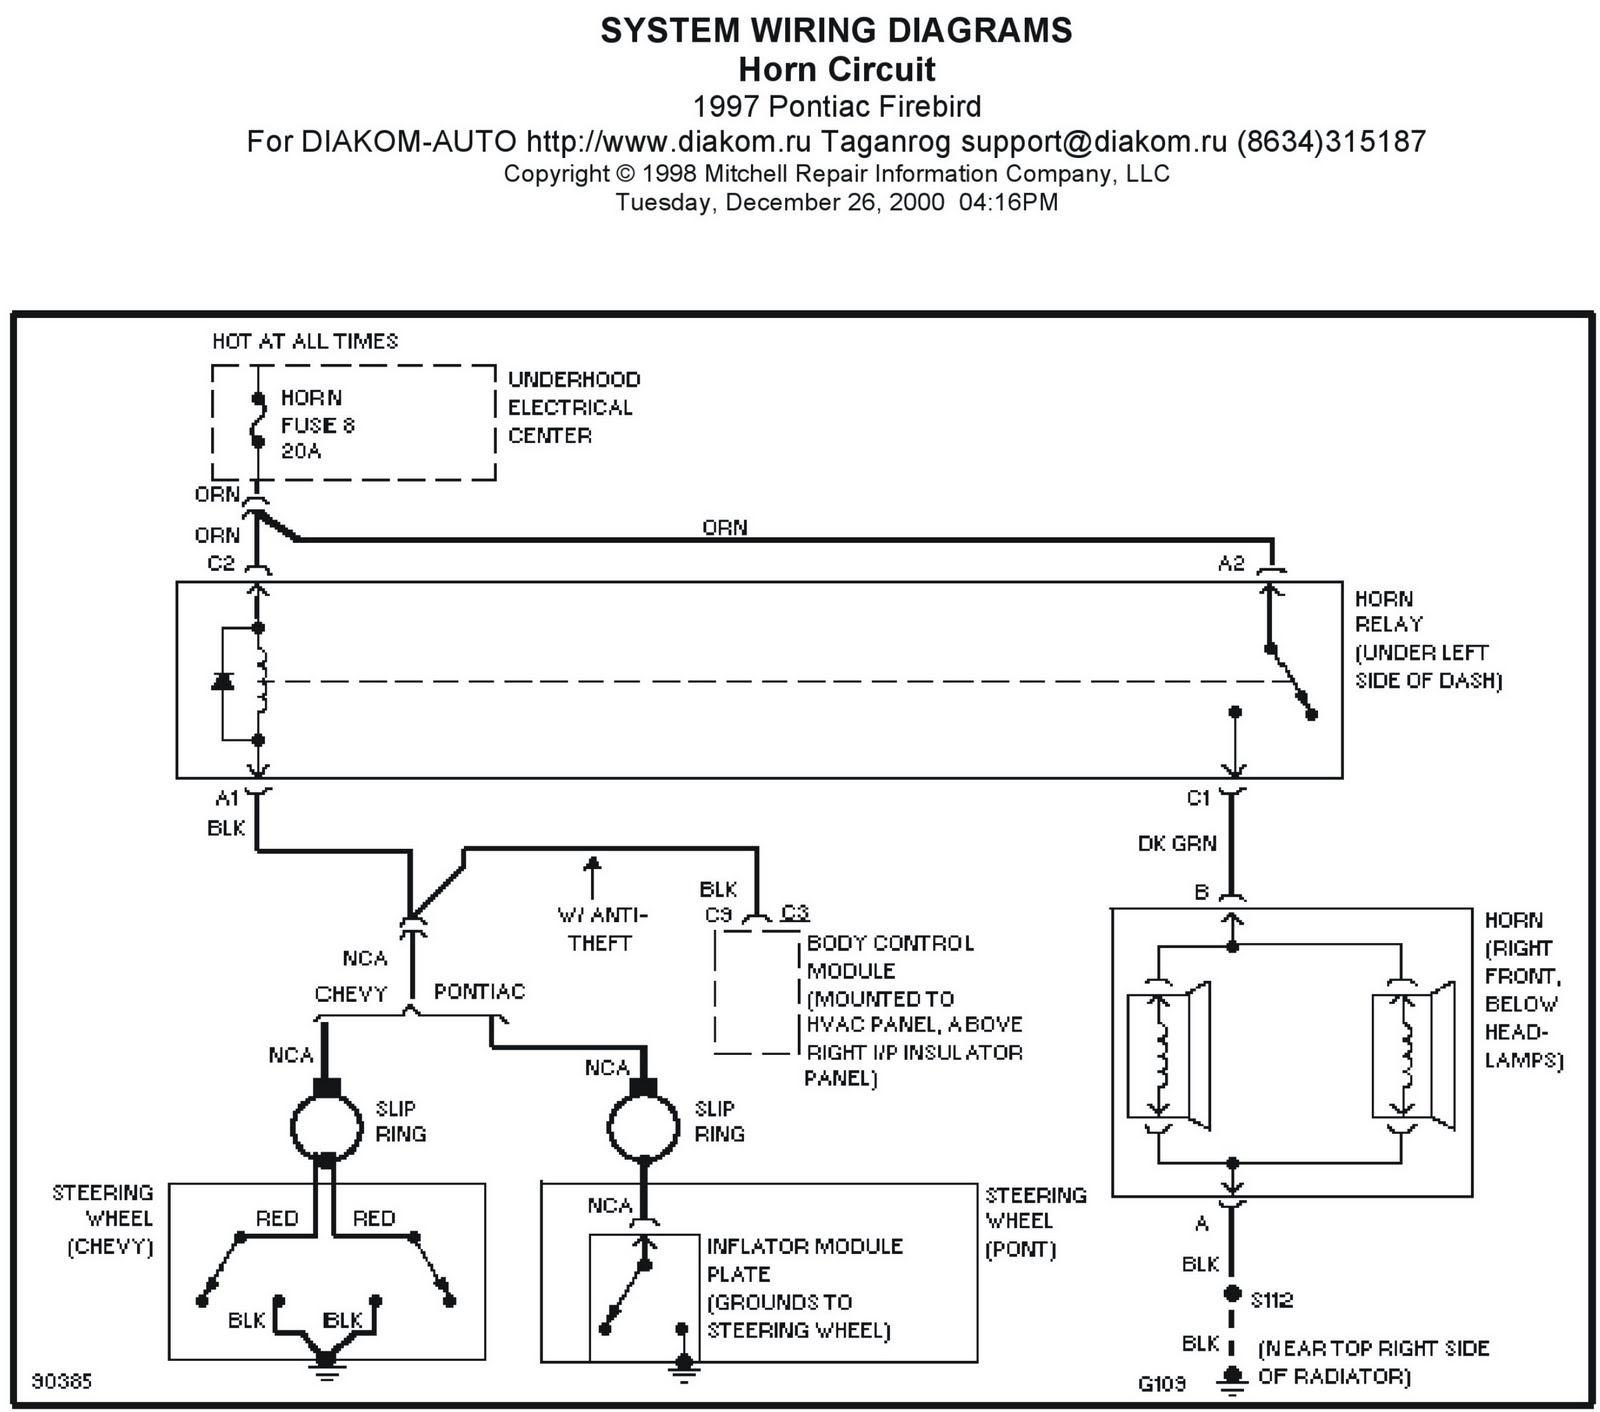 1997 Pontiac Firebird System Wiring Diagrams Horn Circuit. | Schematic